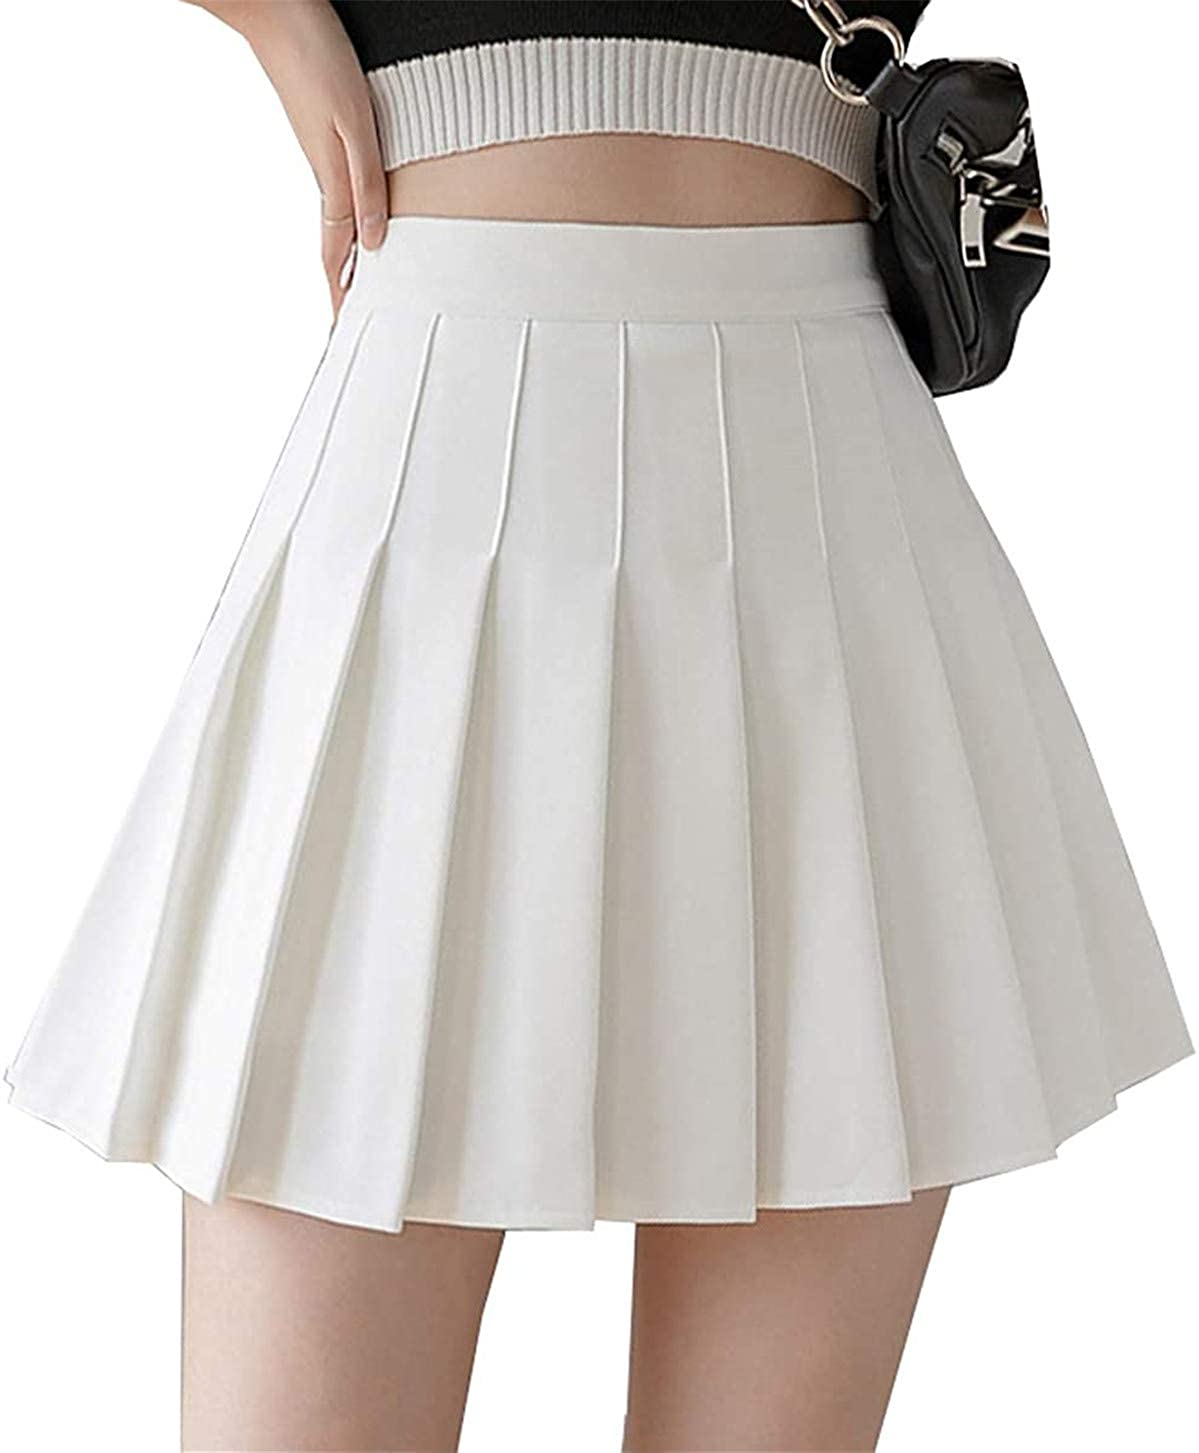 Beautifulfashionlife Women High Waisted Solid Pleated Mini Tennis Skorts Or Skirt 13 Colors 2 Styles 